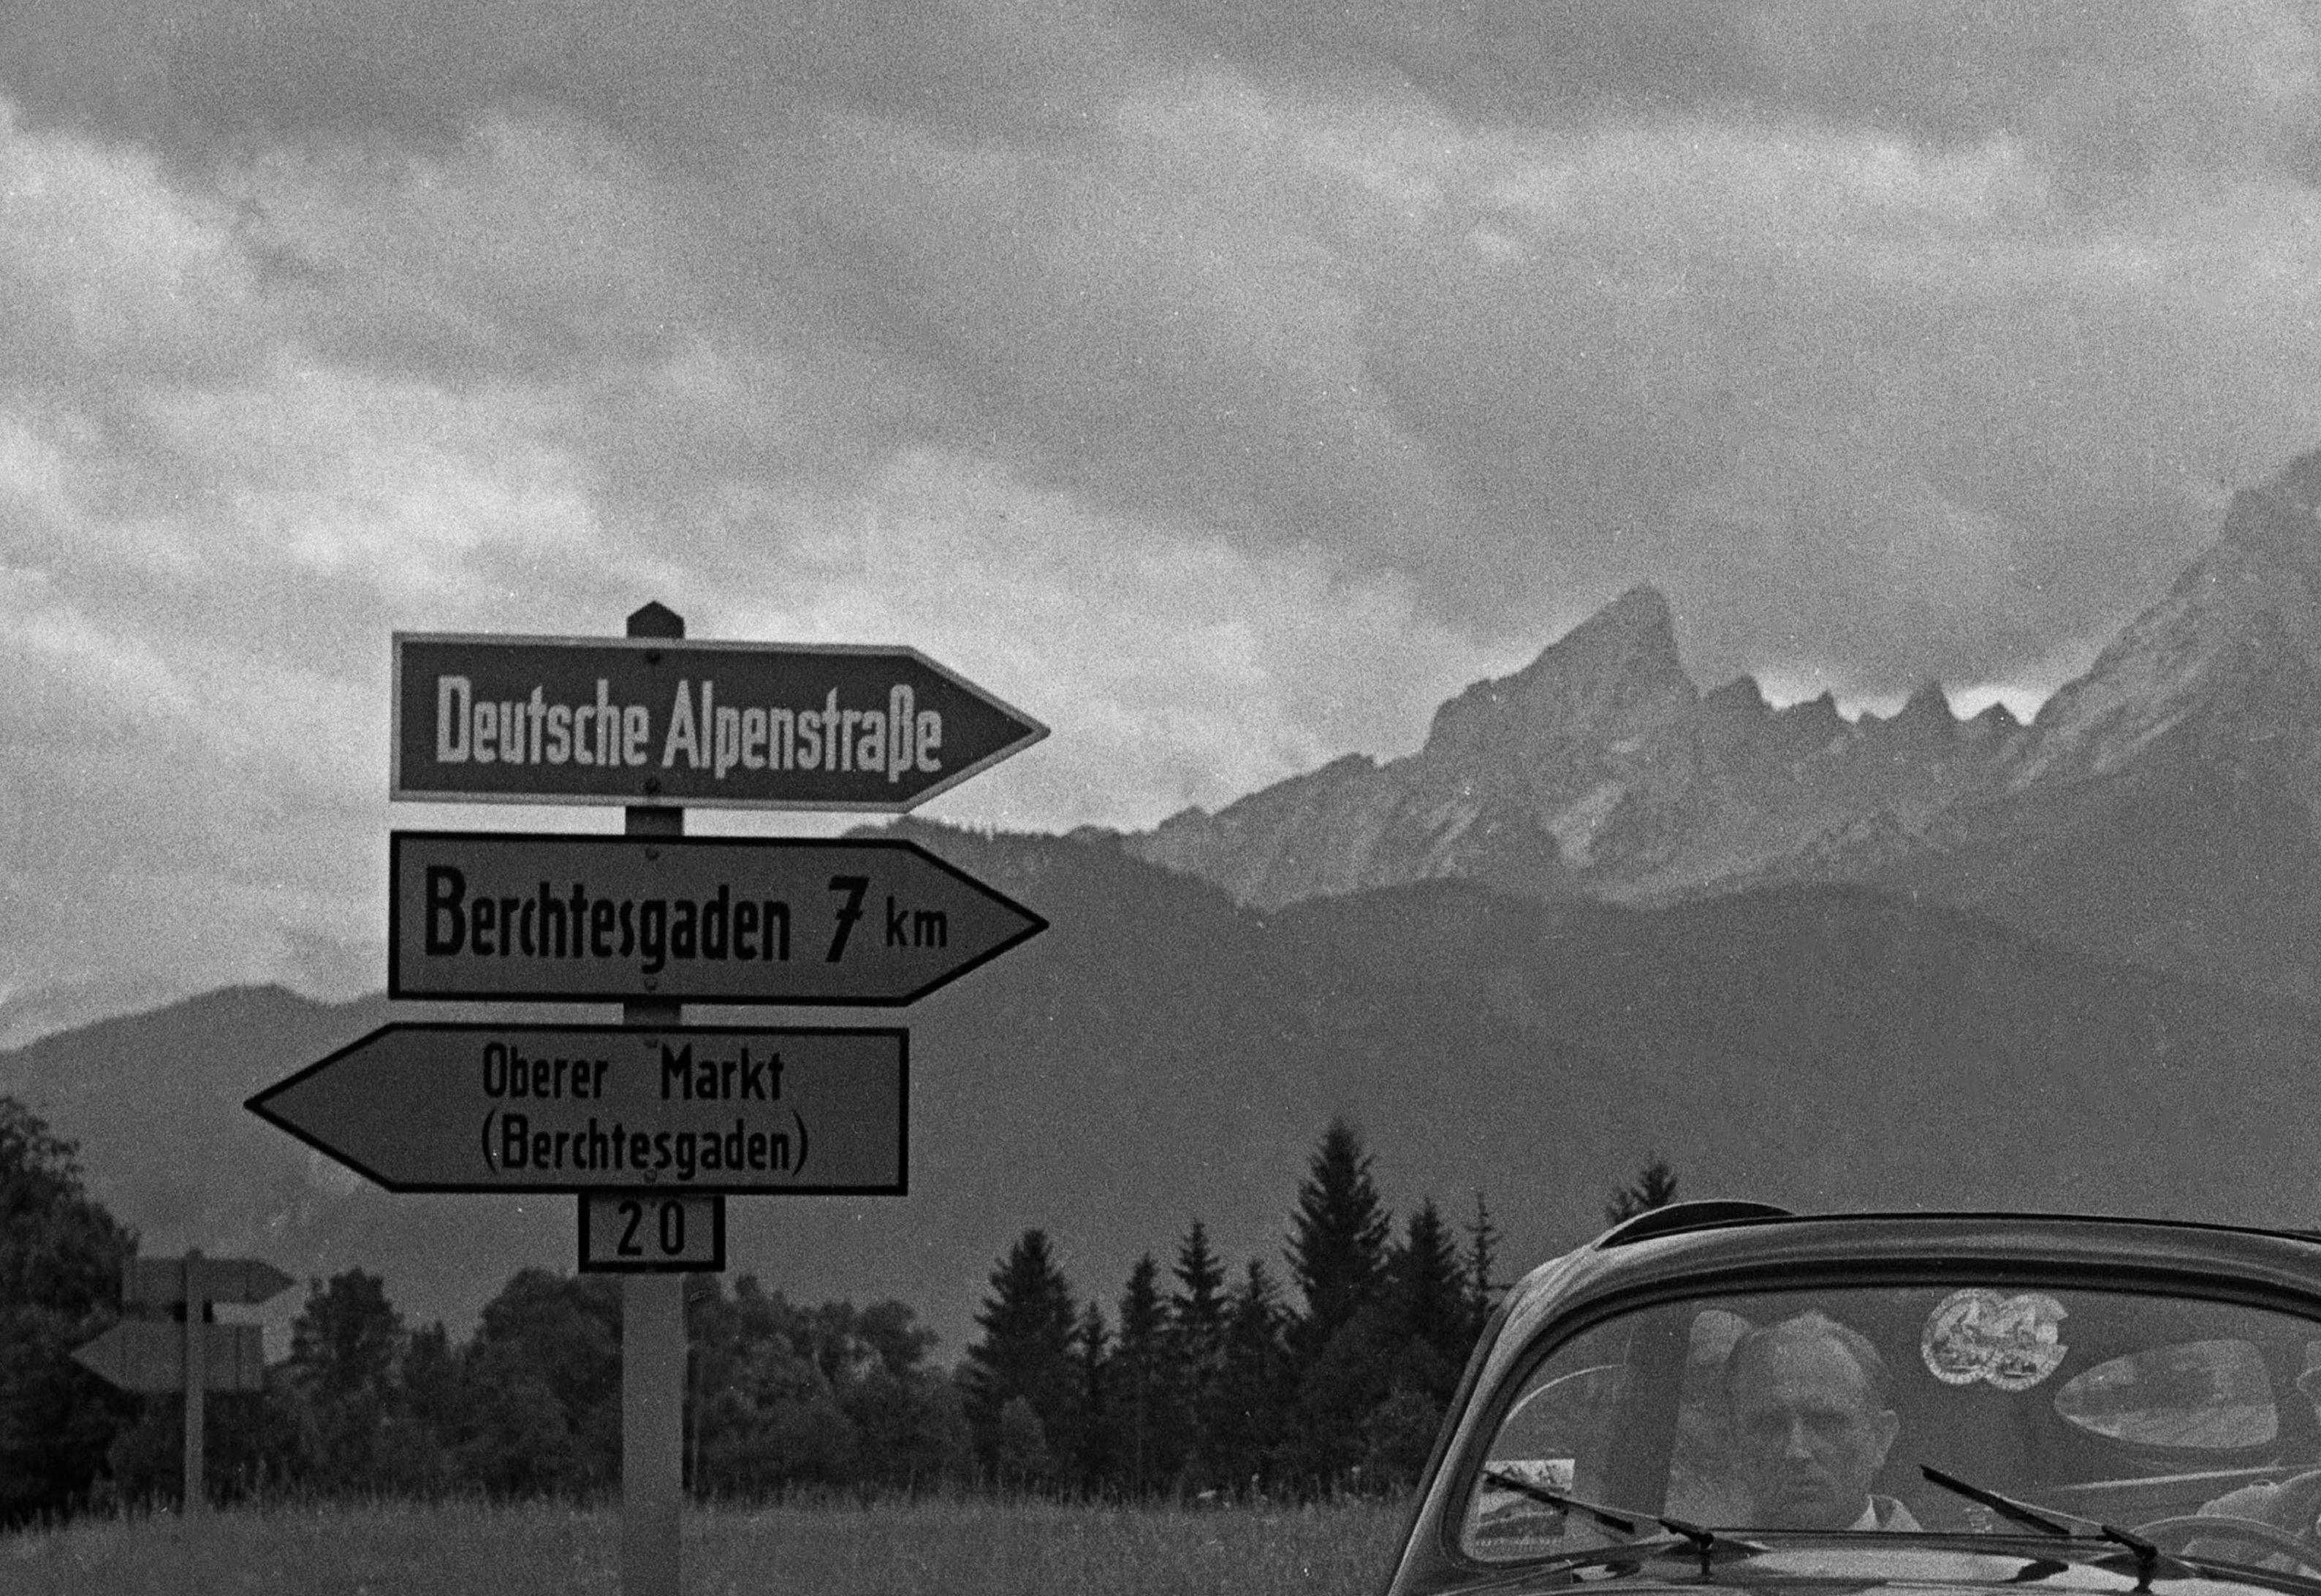 People traveling in Volkswagen beetle, Germany 1939 Printed Later  - Photograph by Karl Heinrich Lämmel